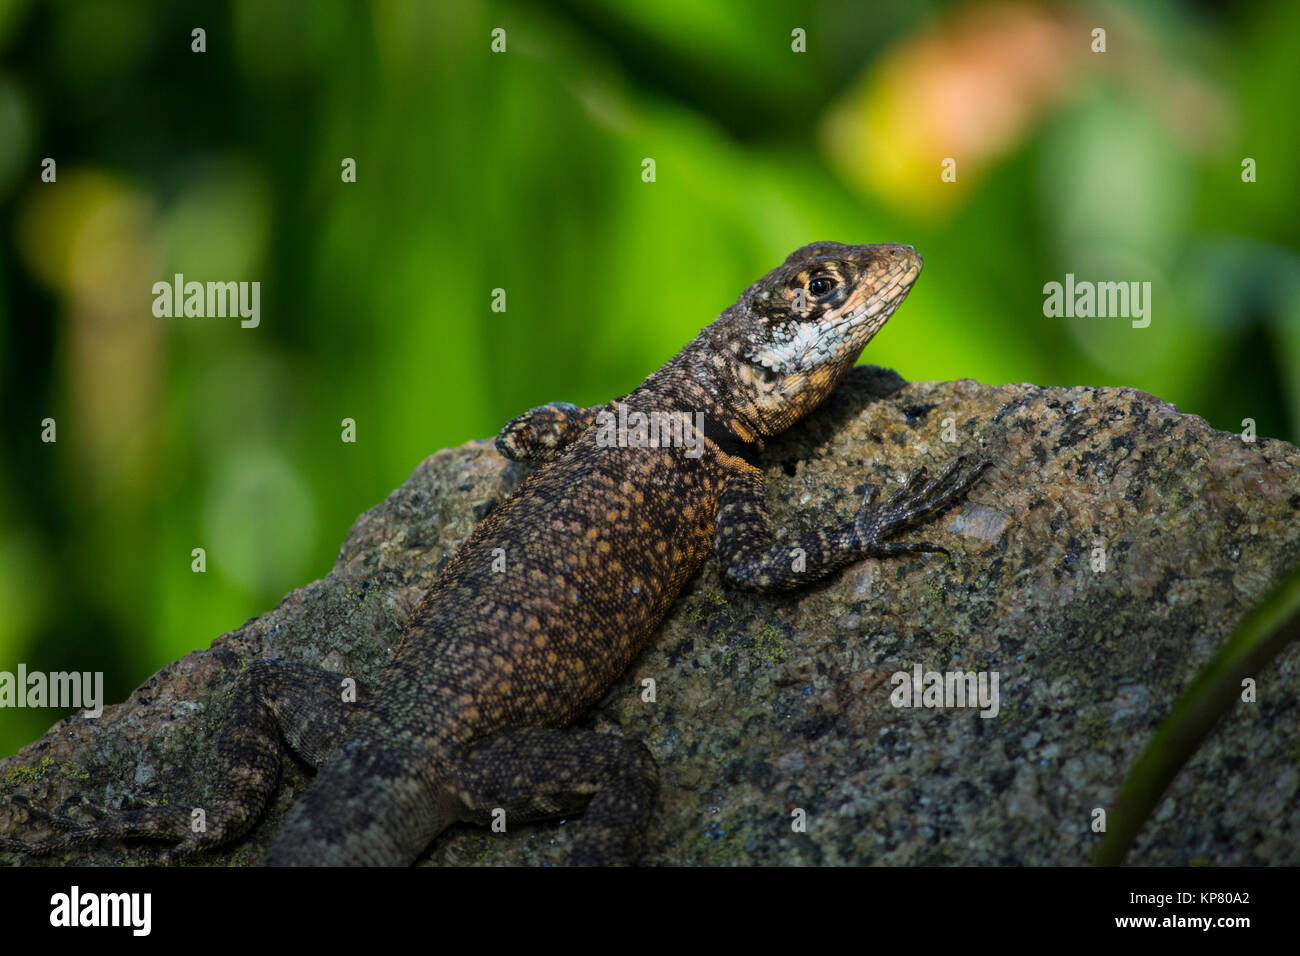 A Tropidurus hispidus lizard on a rock Stock Photo